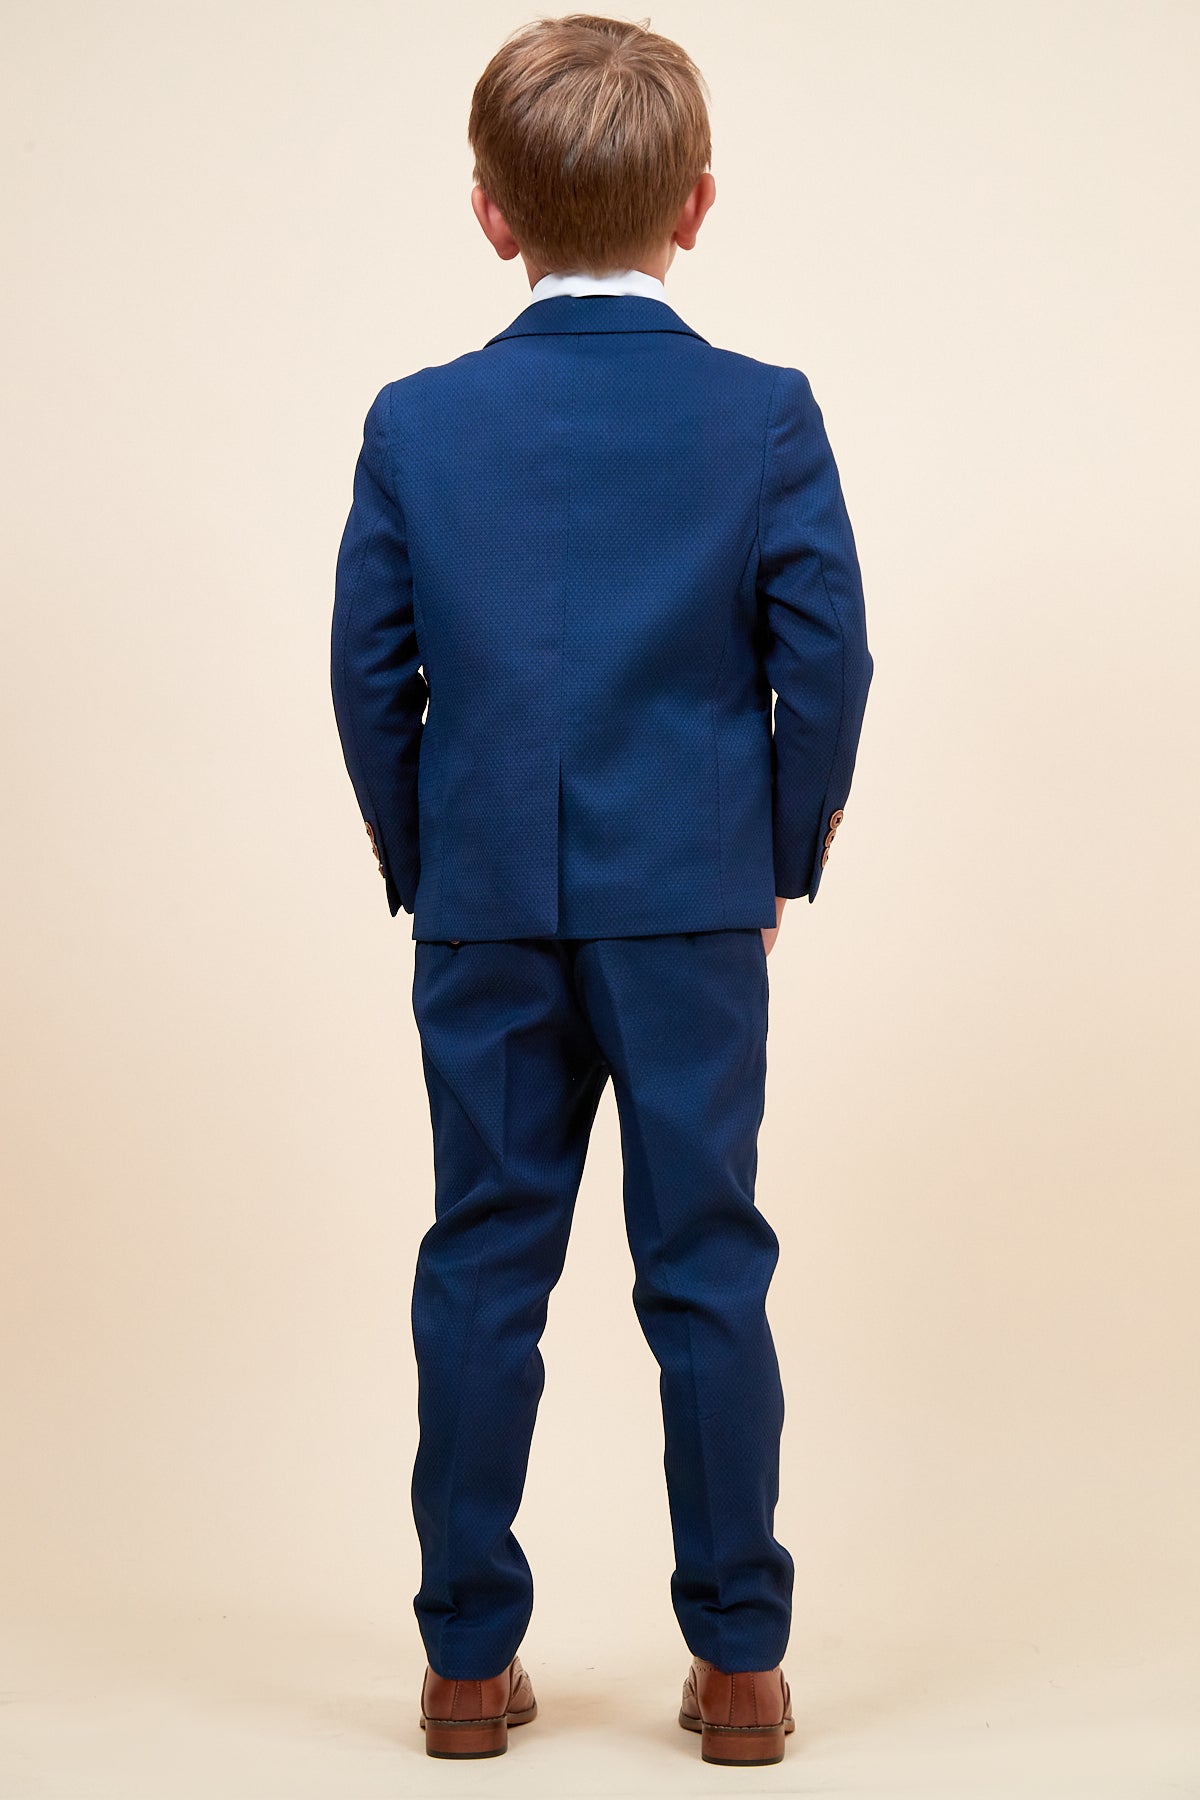 Children's Royal Blue Three-Piece Suit